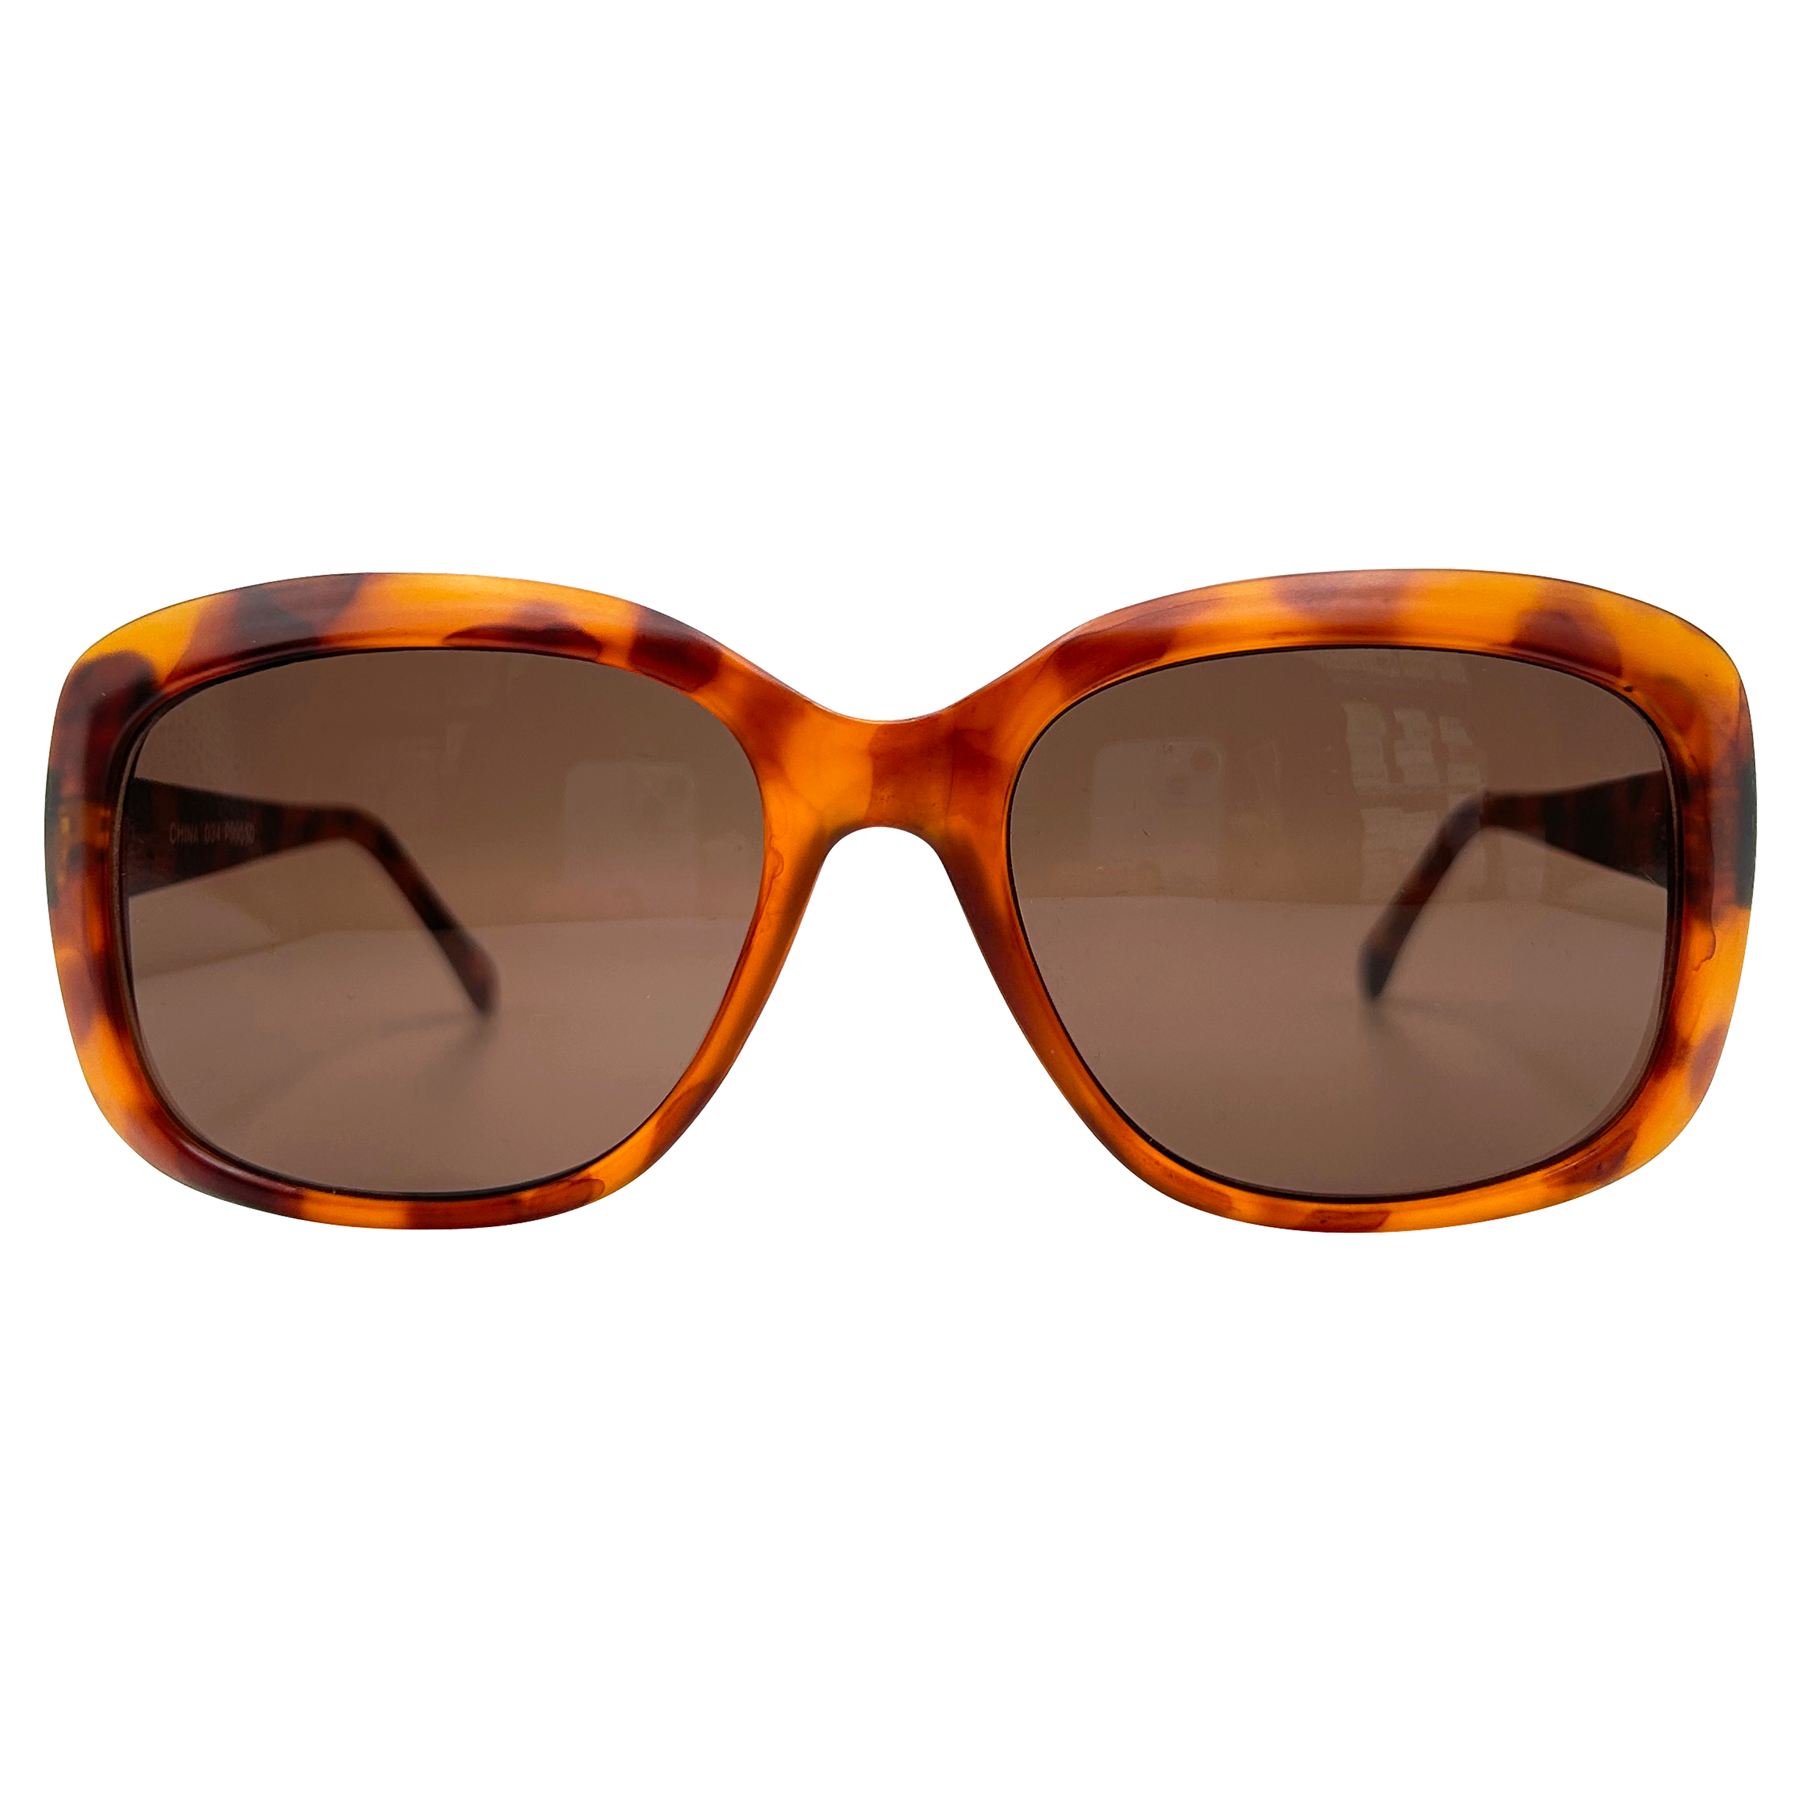 BLAKE Tortoise/Brown Square Sunglasses